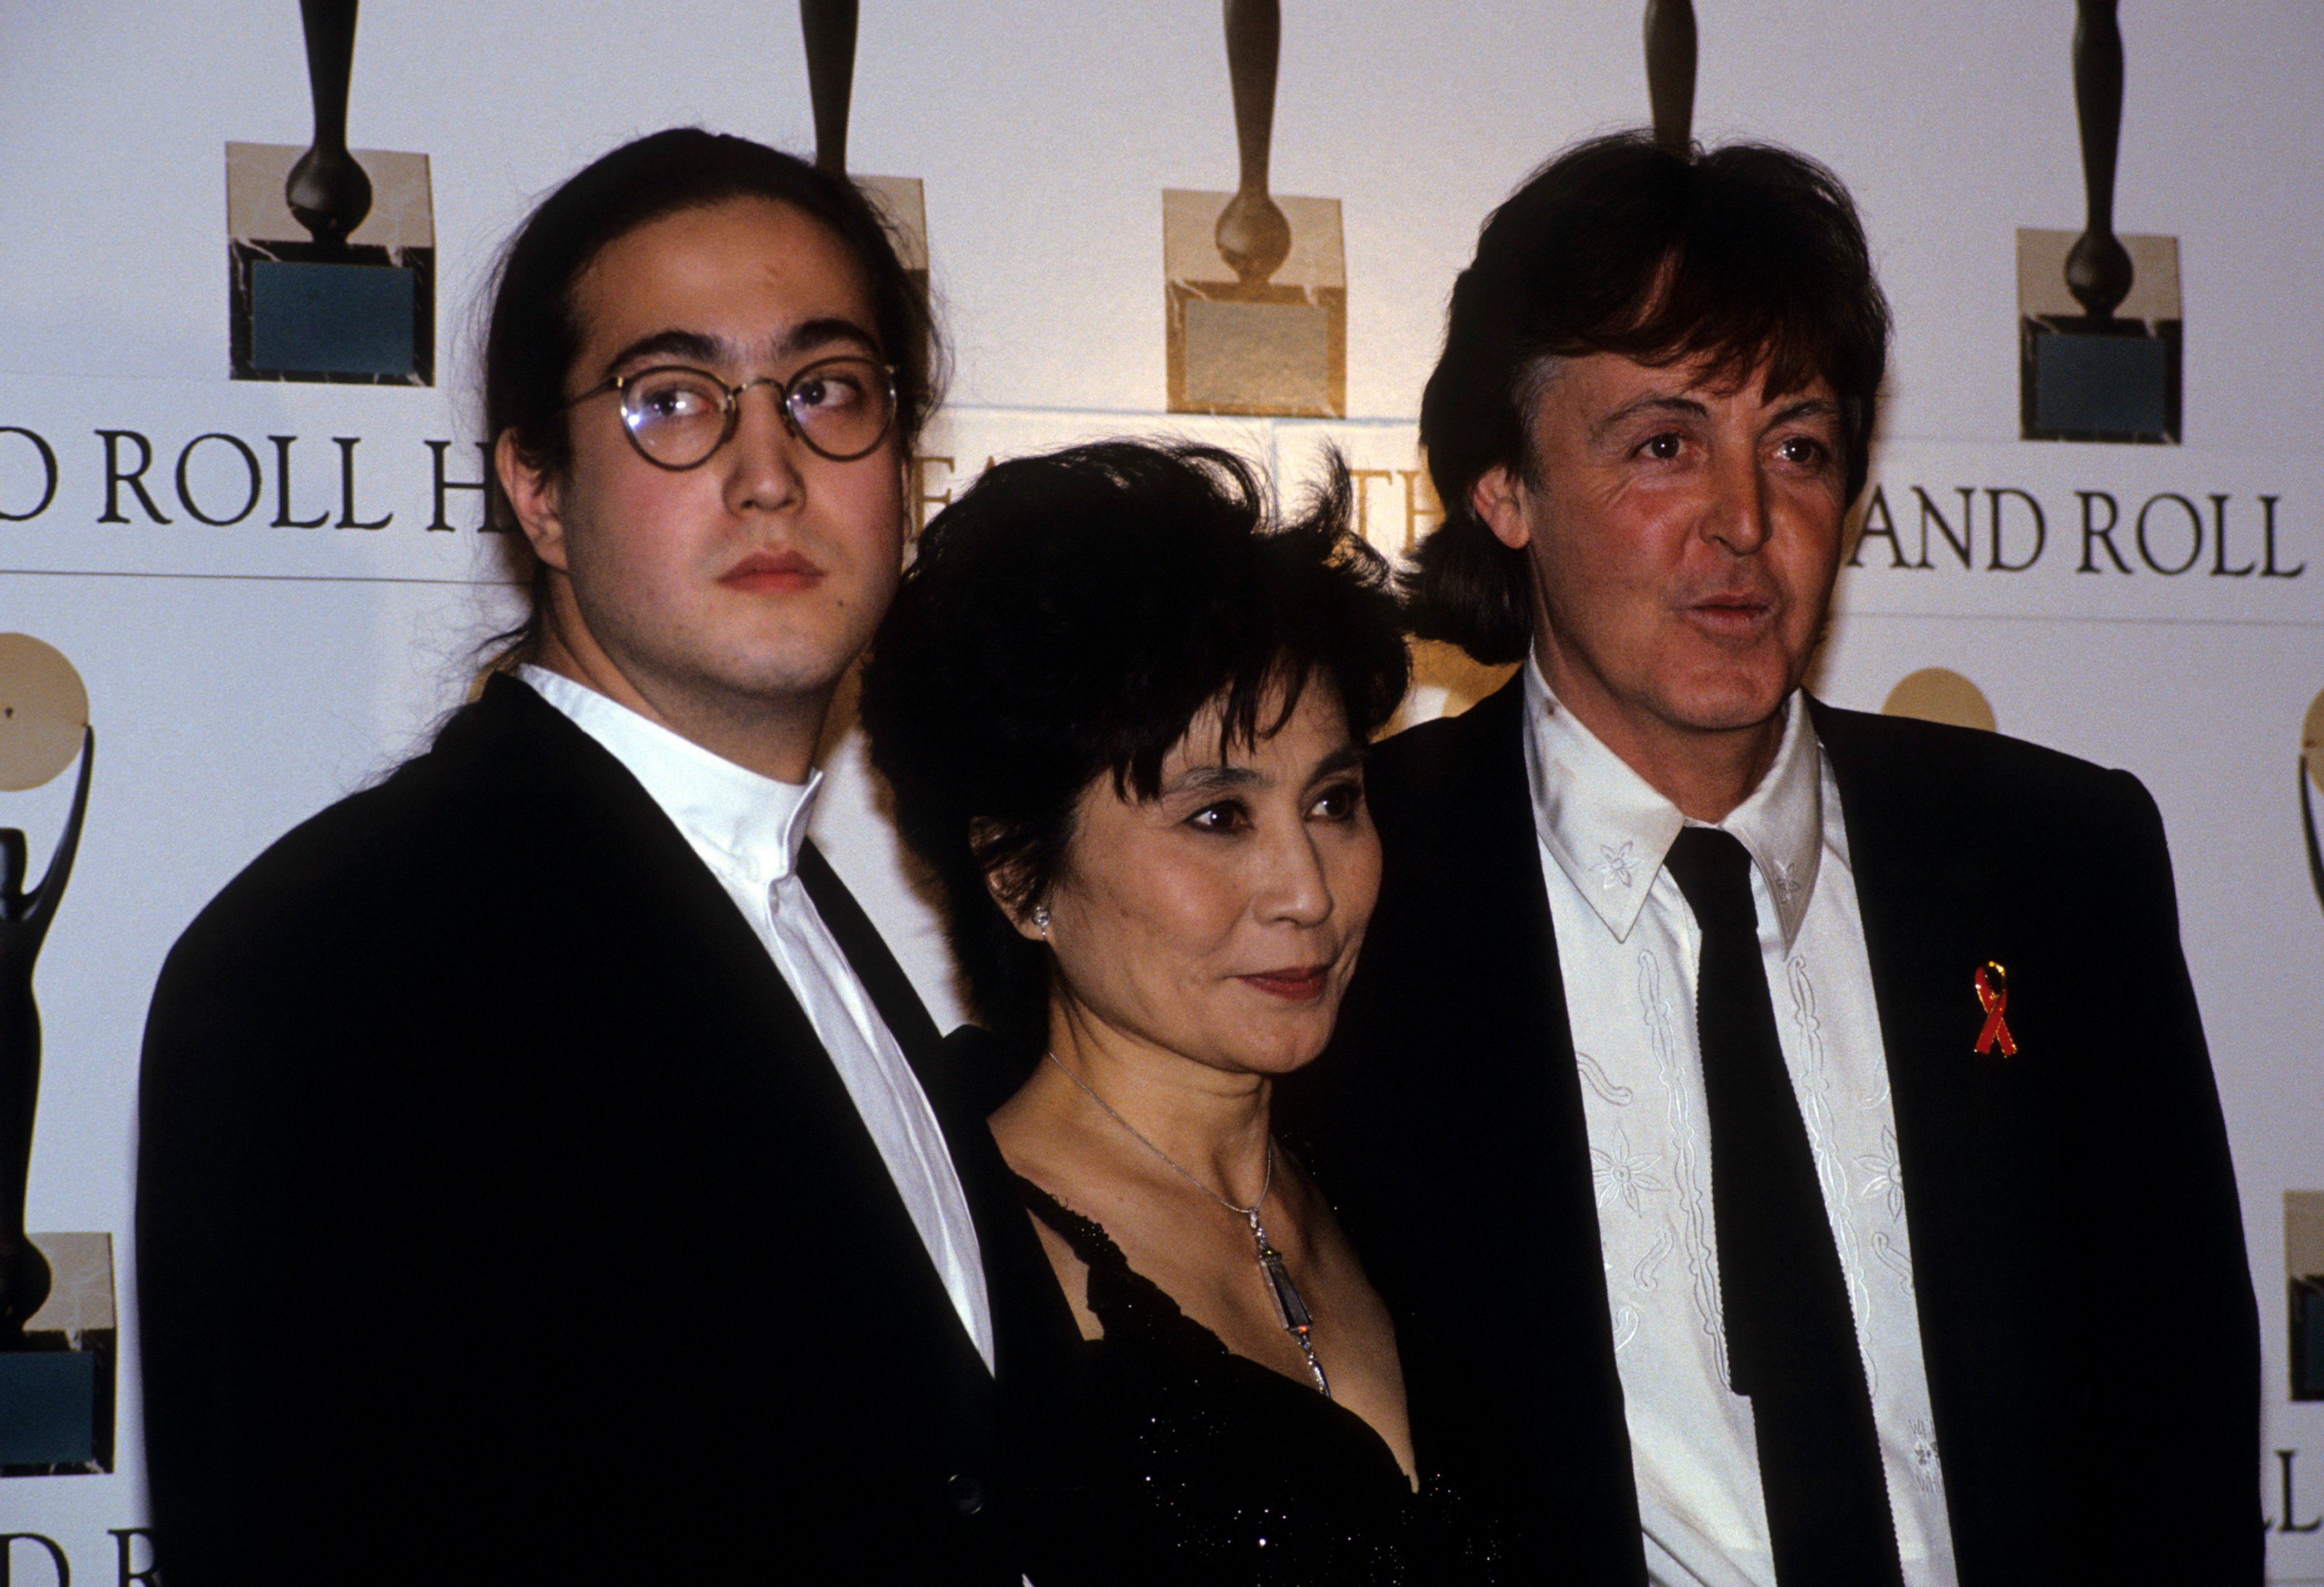 Sean Ono Lennon, Yoko Ono, and Paul McCartney wearing black